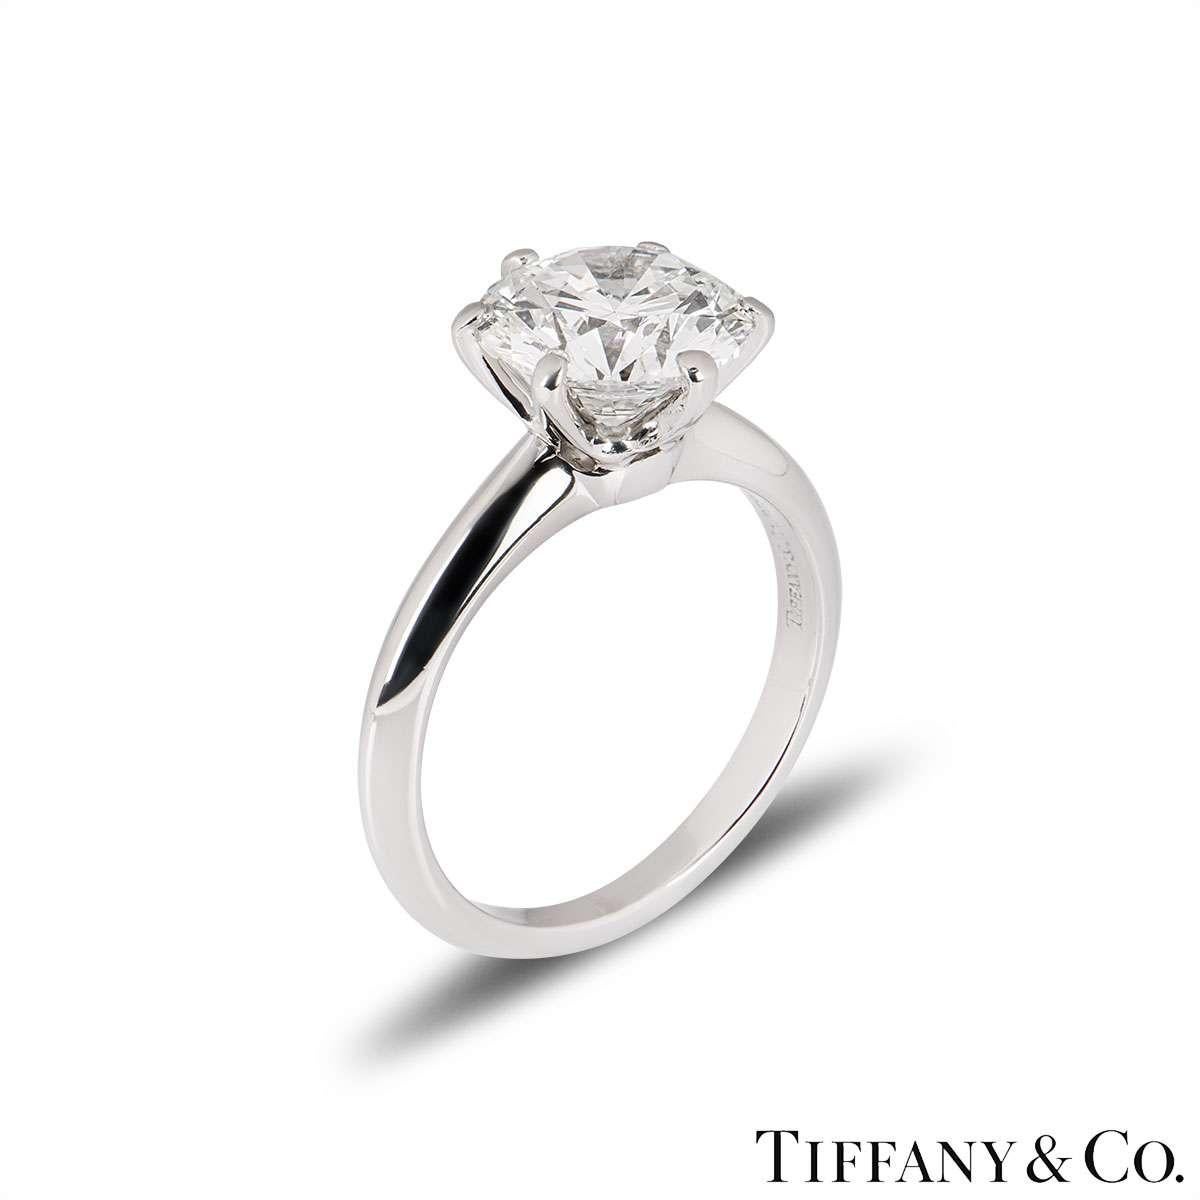 Round Cut Tiffany & Co. Round Brilliant Cut Diamond Ring 2.35 Carat GIA Certified